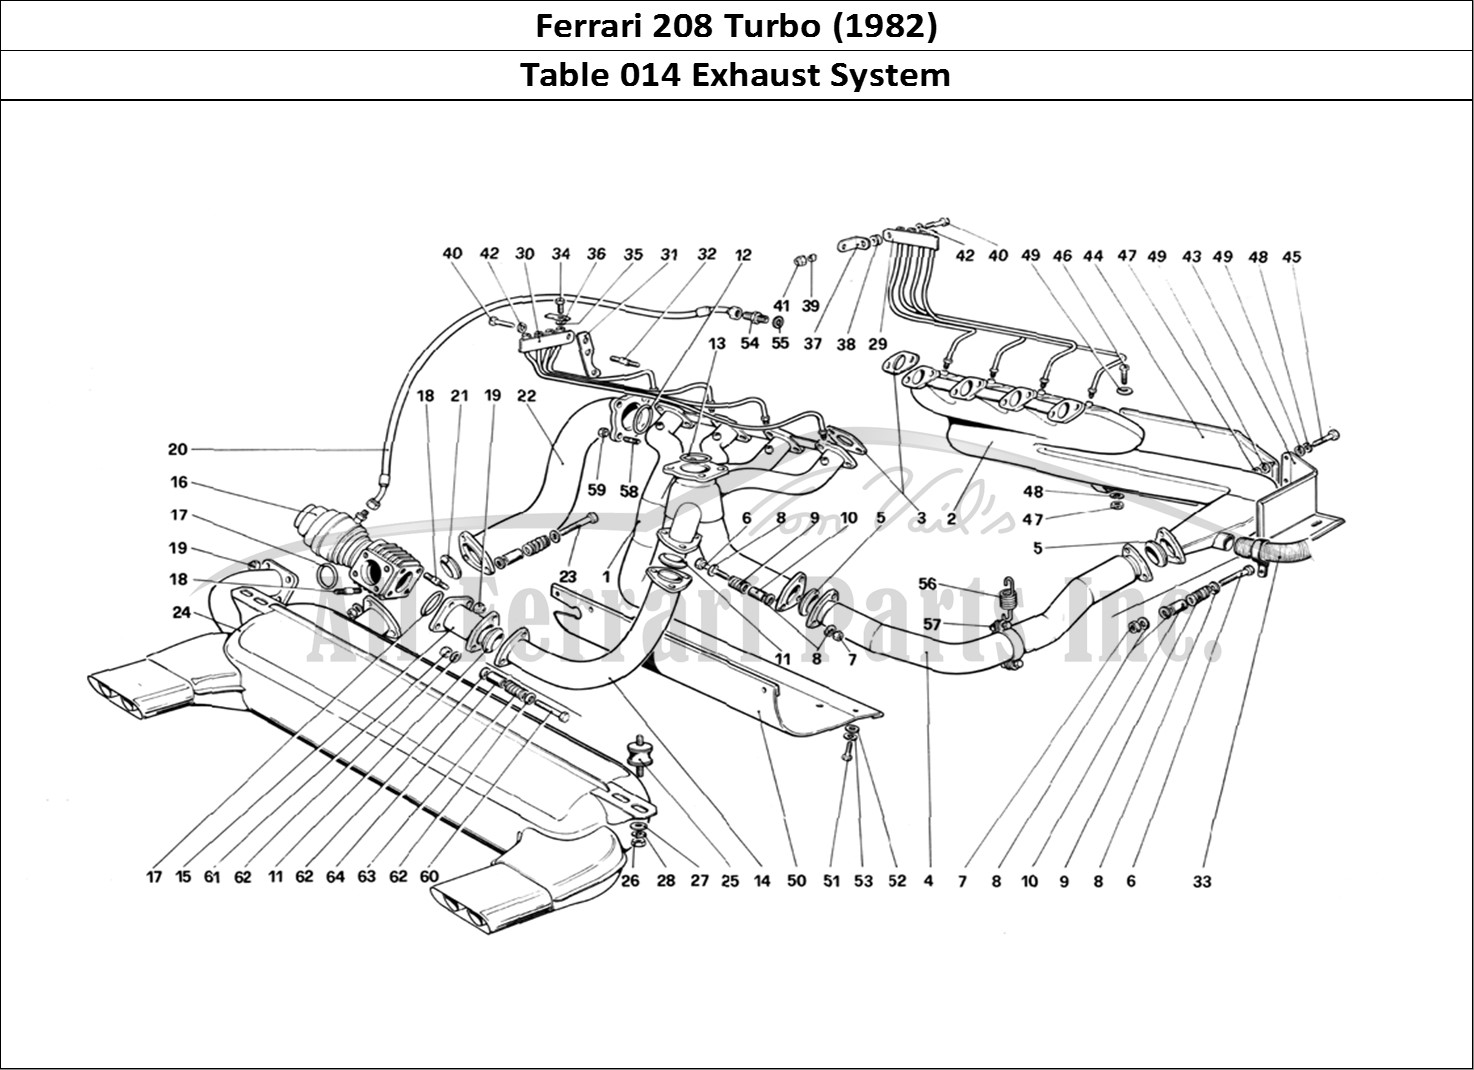 Ferrari Parts Ferrari 208 Turbo (1982) Page 014 Exhaust System